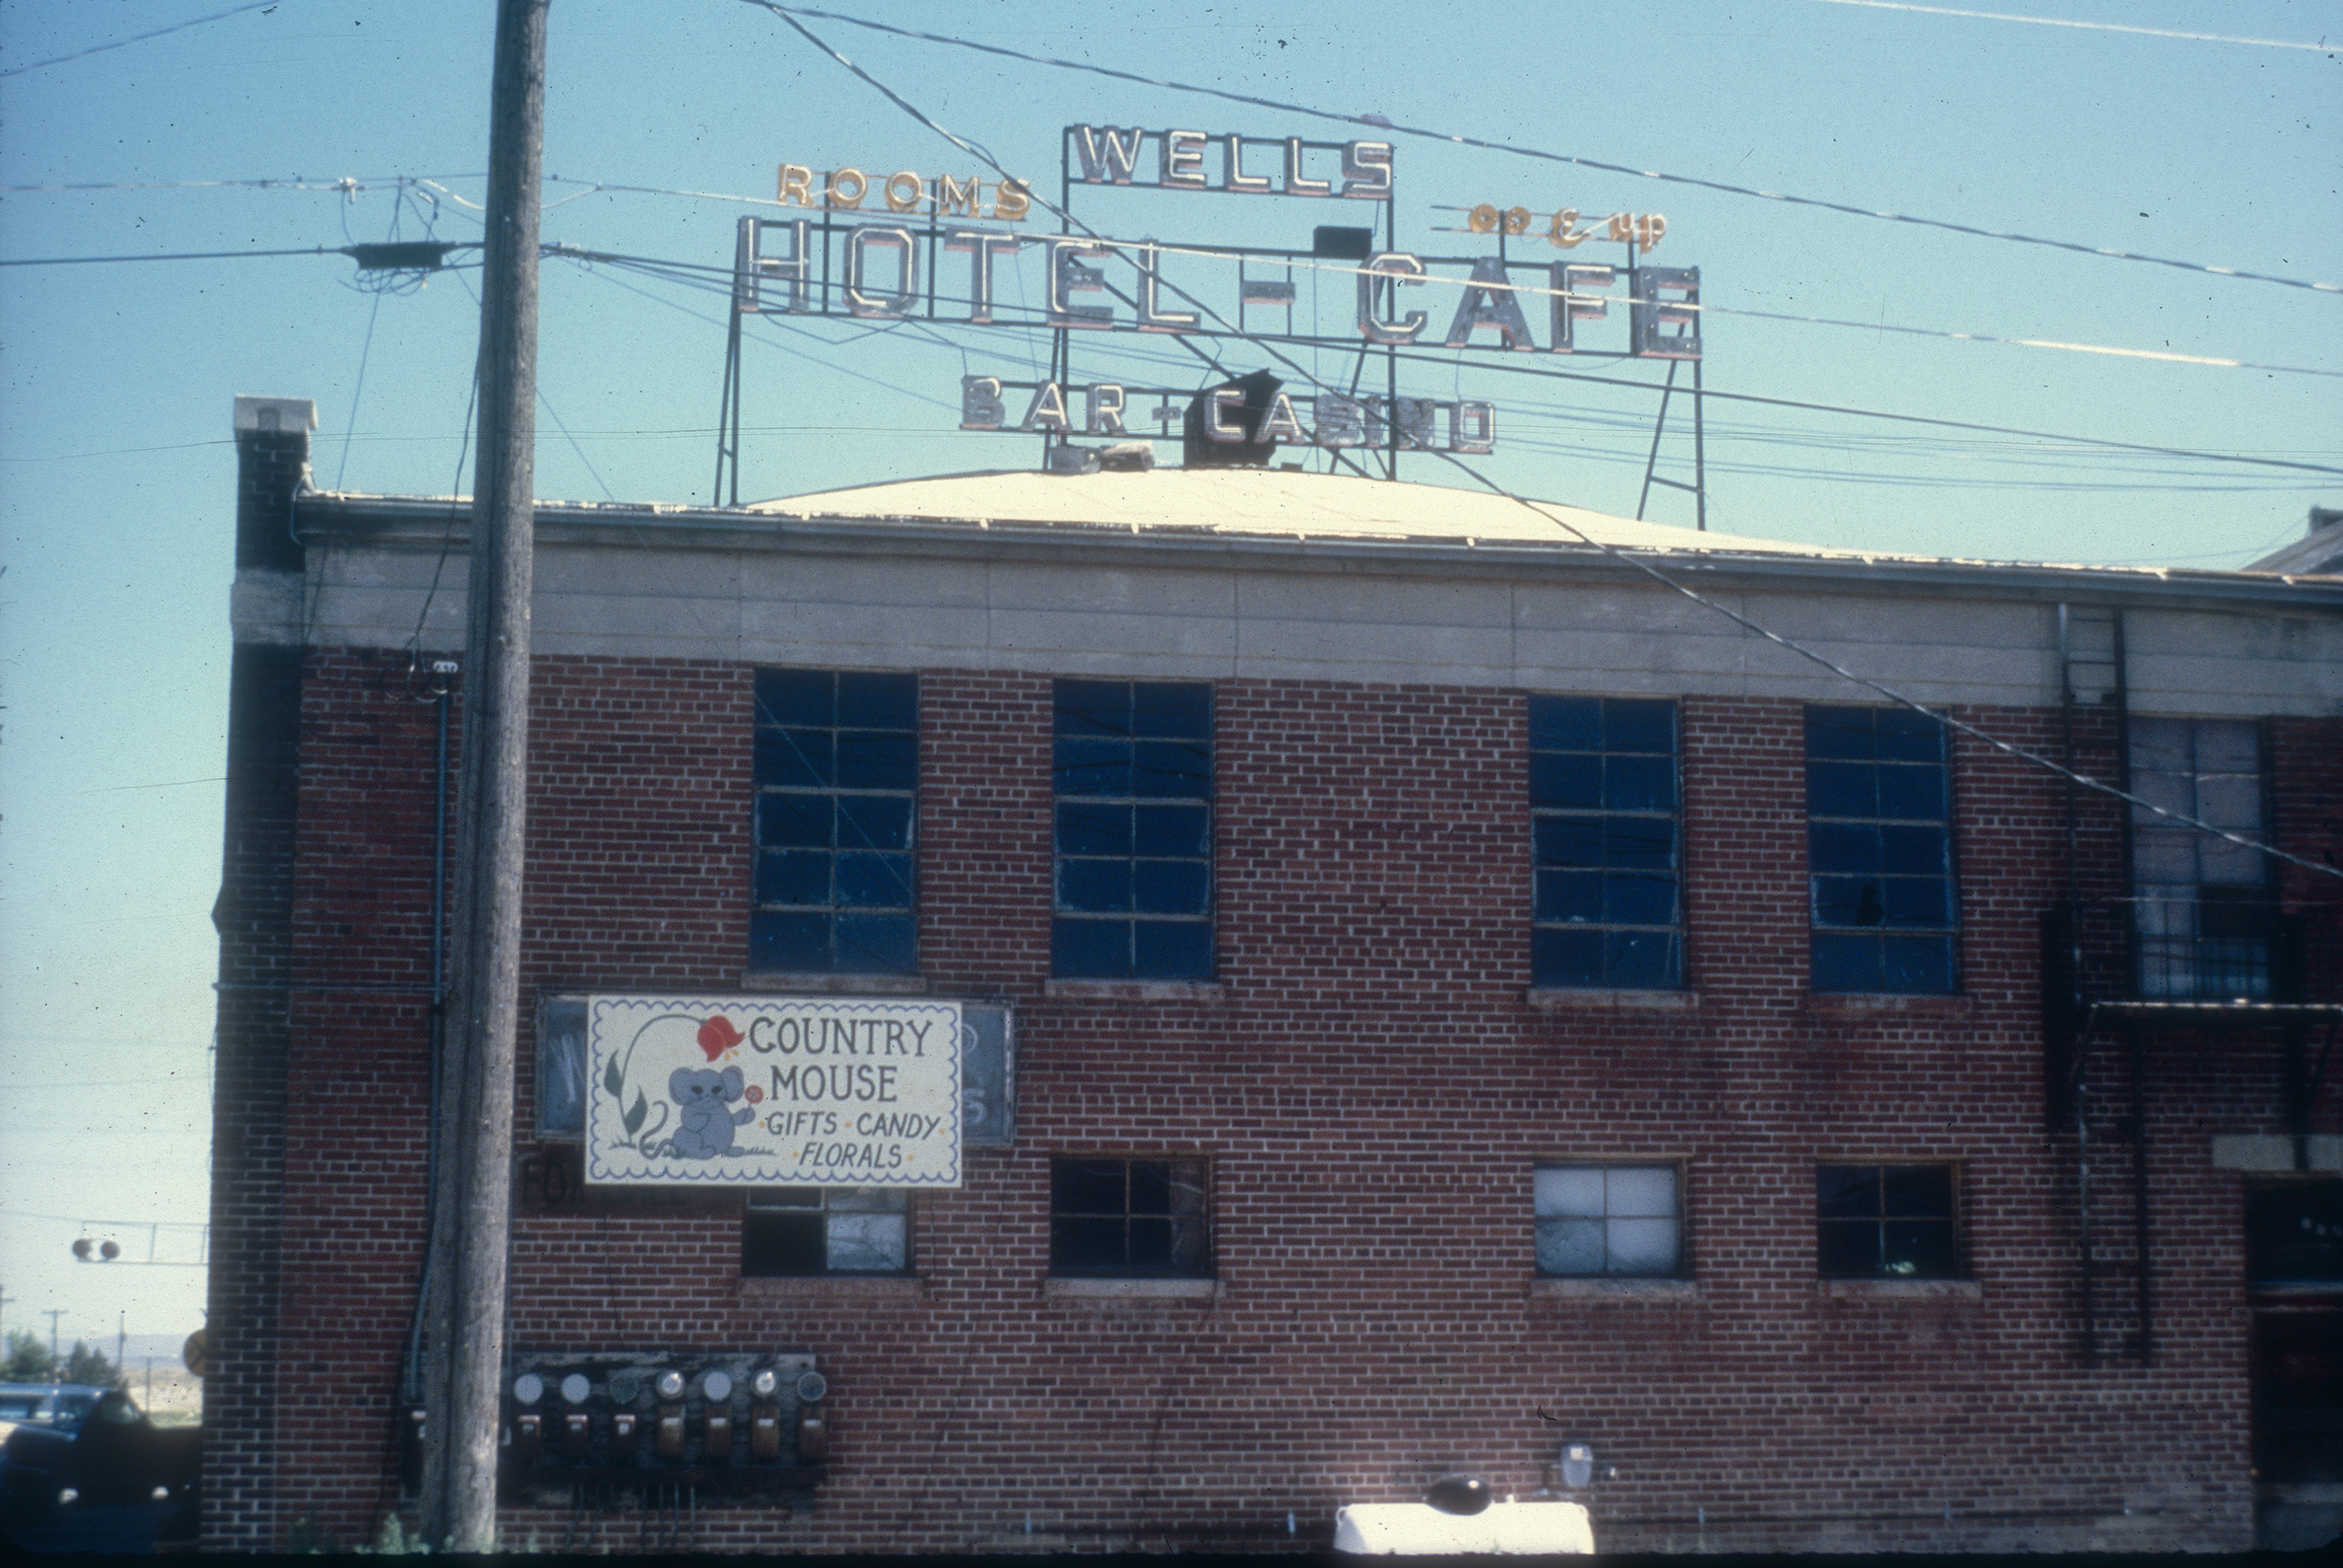 Slide of the Wells Hotel, Wells, Nevada, 1986